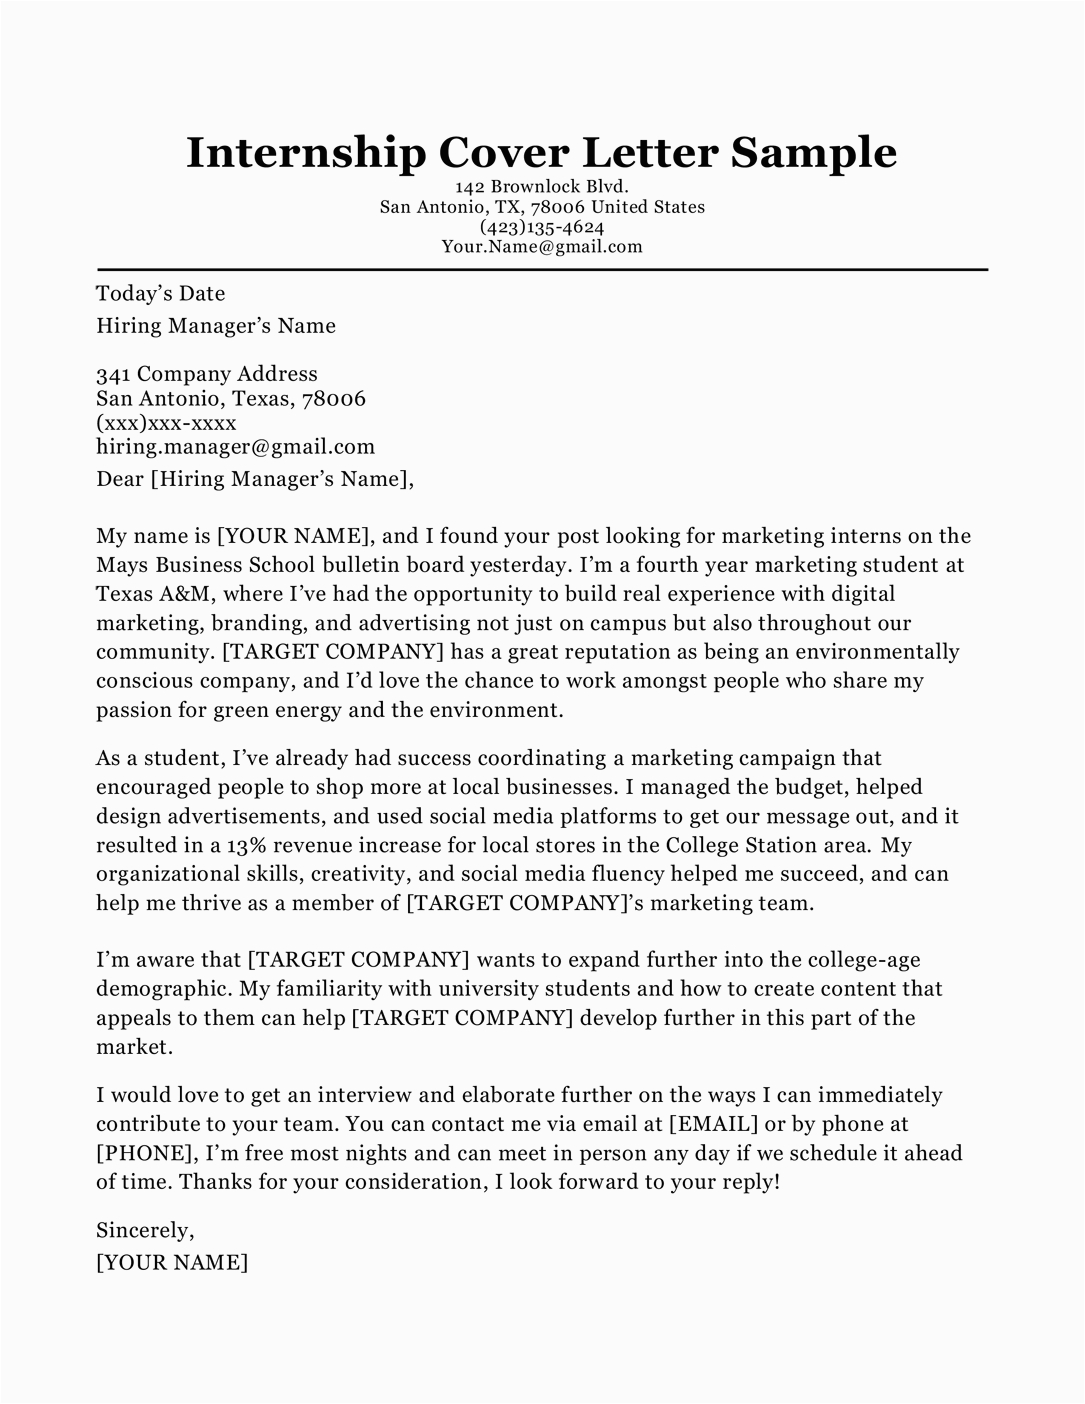 internship college student cover letter sample